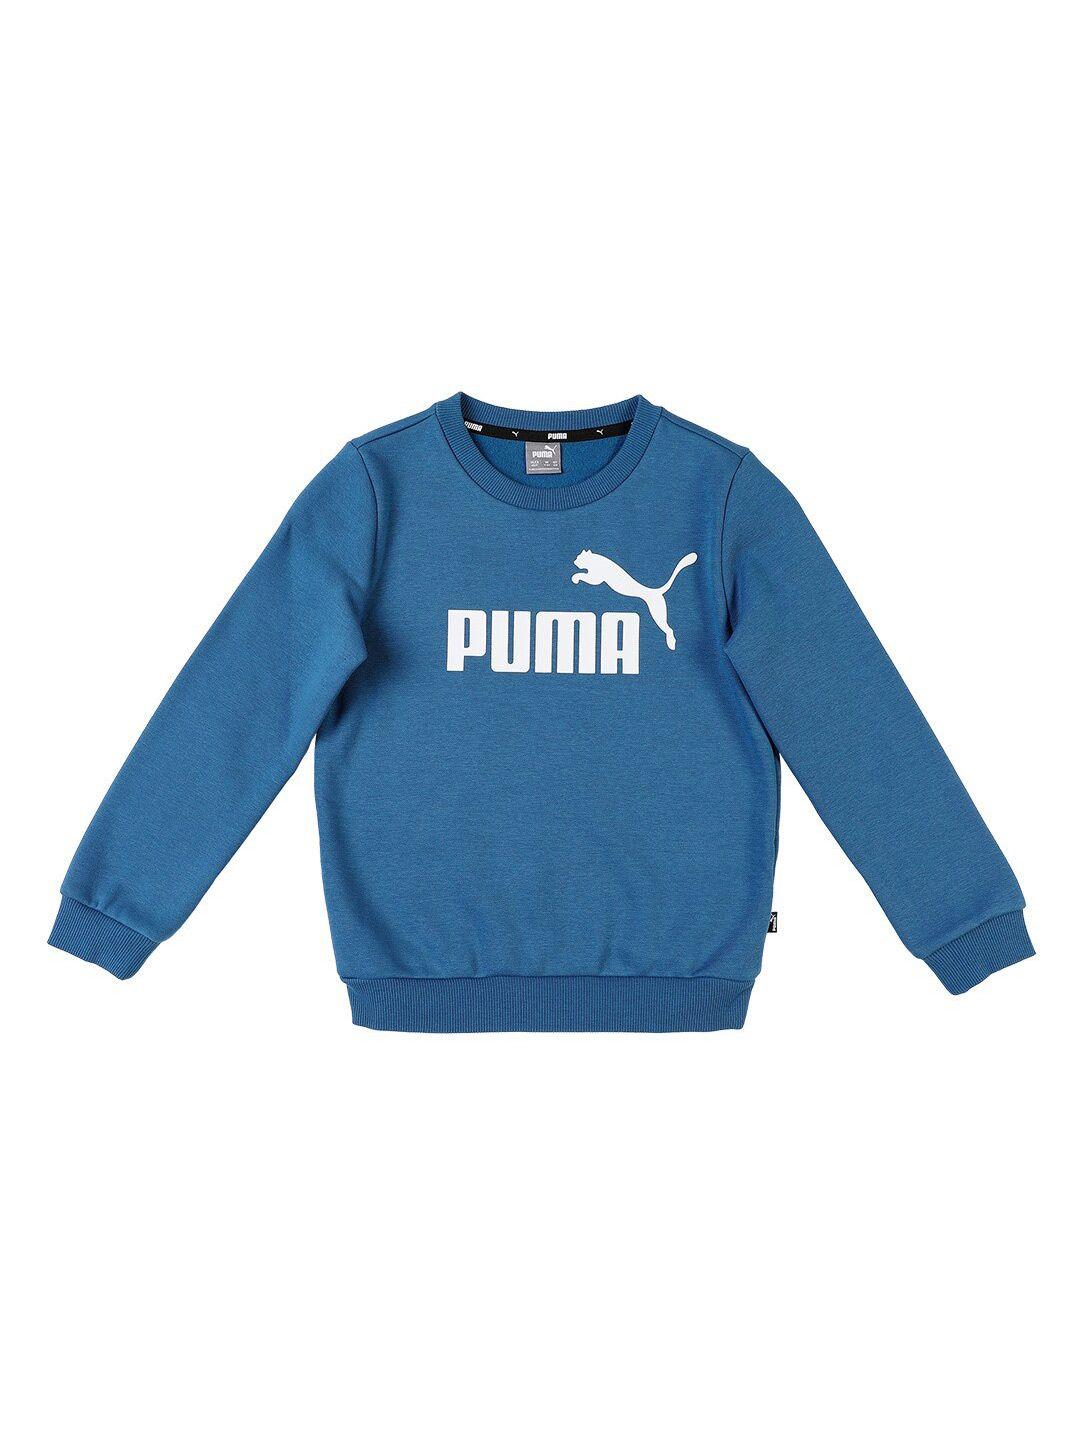 puma-boys-essential-big-logo-printed-cotton-sweatshirt